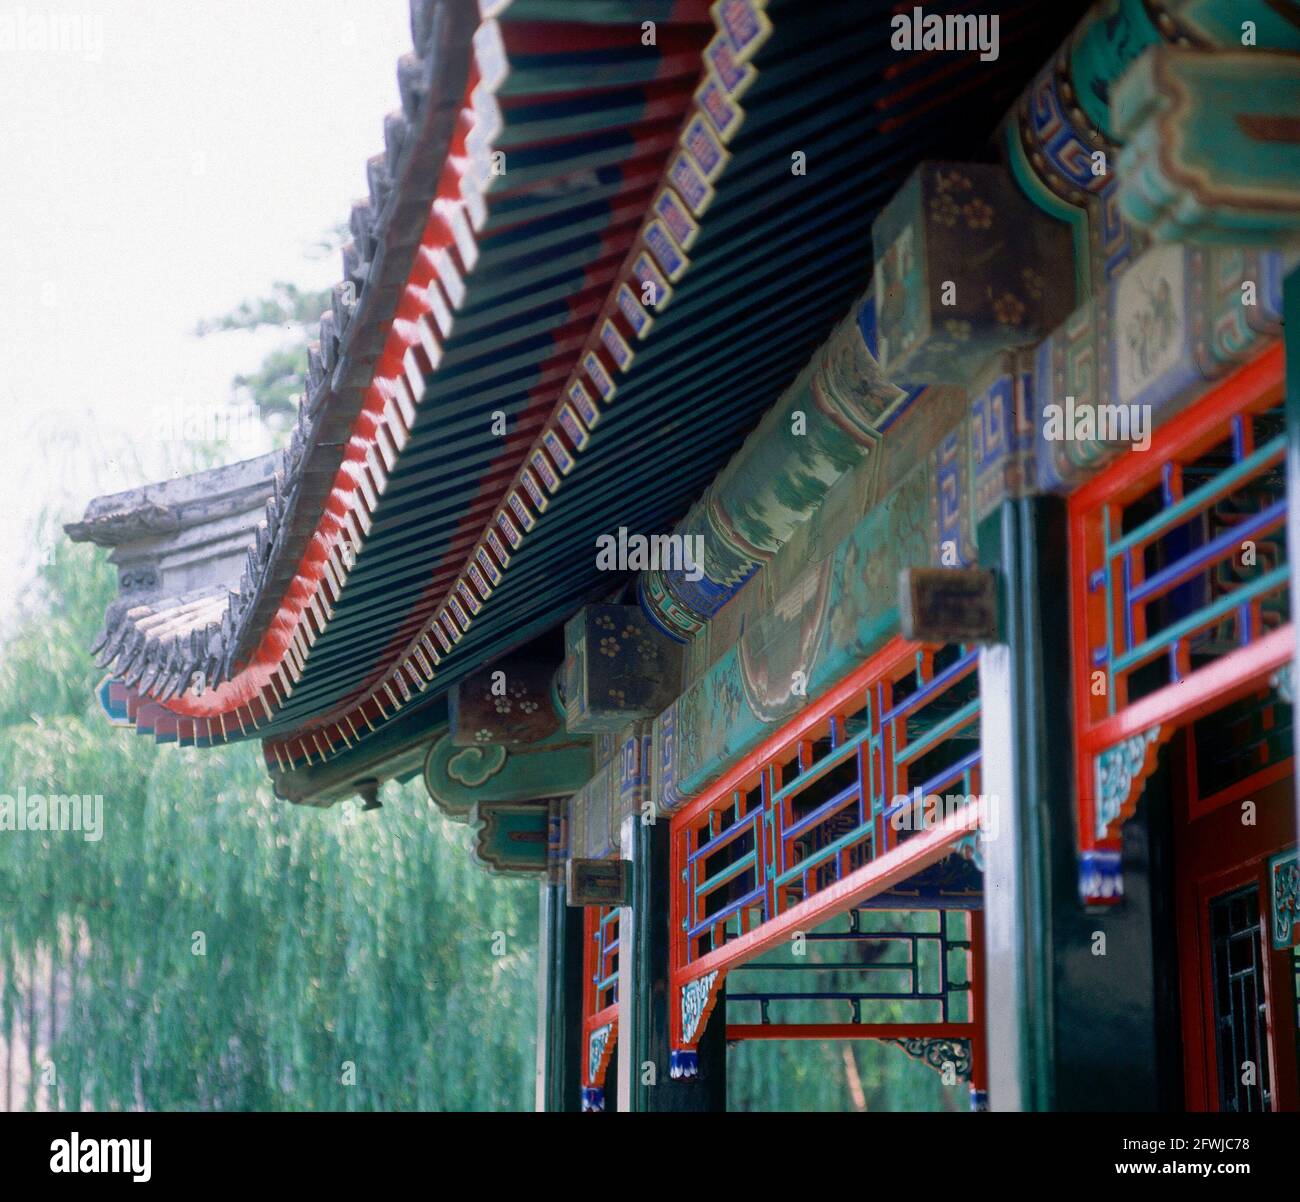 PABELLON-DETALLE DE ALERO Y LACADO-DINASTIA QUING. Location: SOMMERPALAIS. Peking. China. Stock Photo